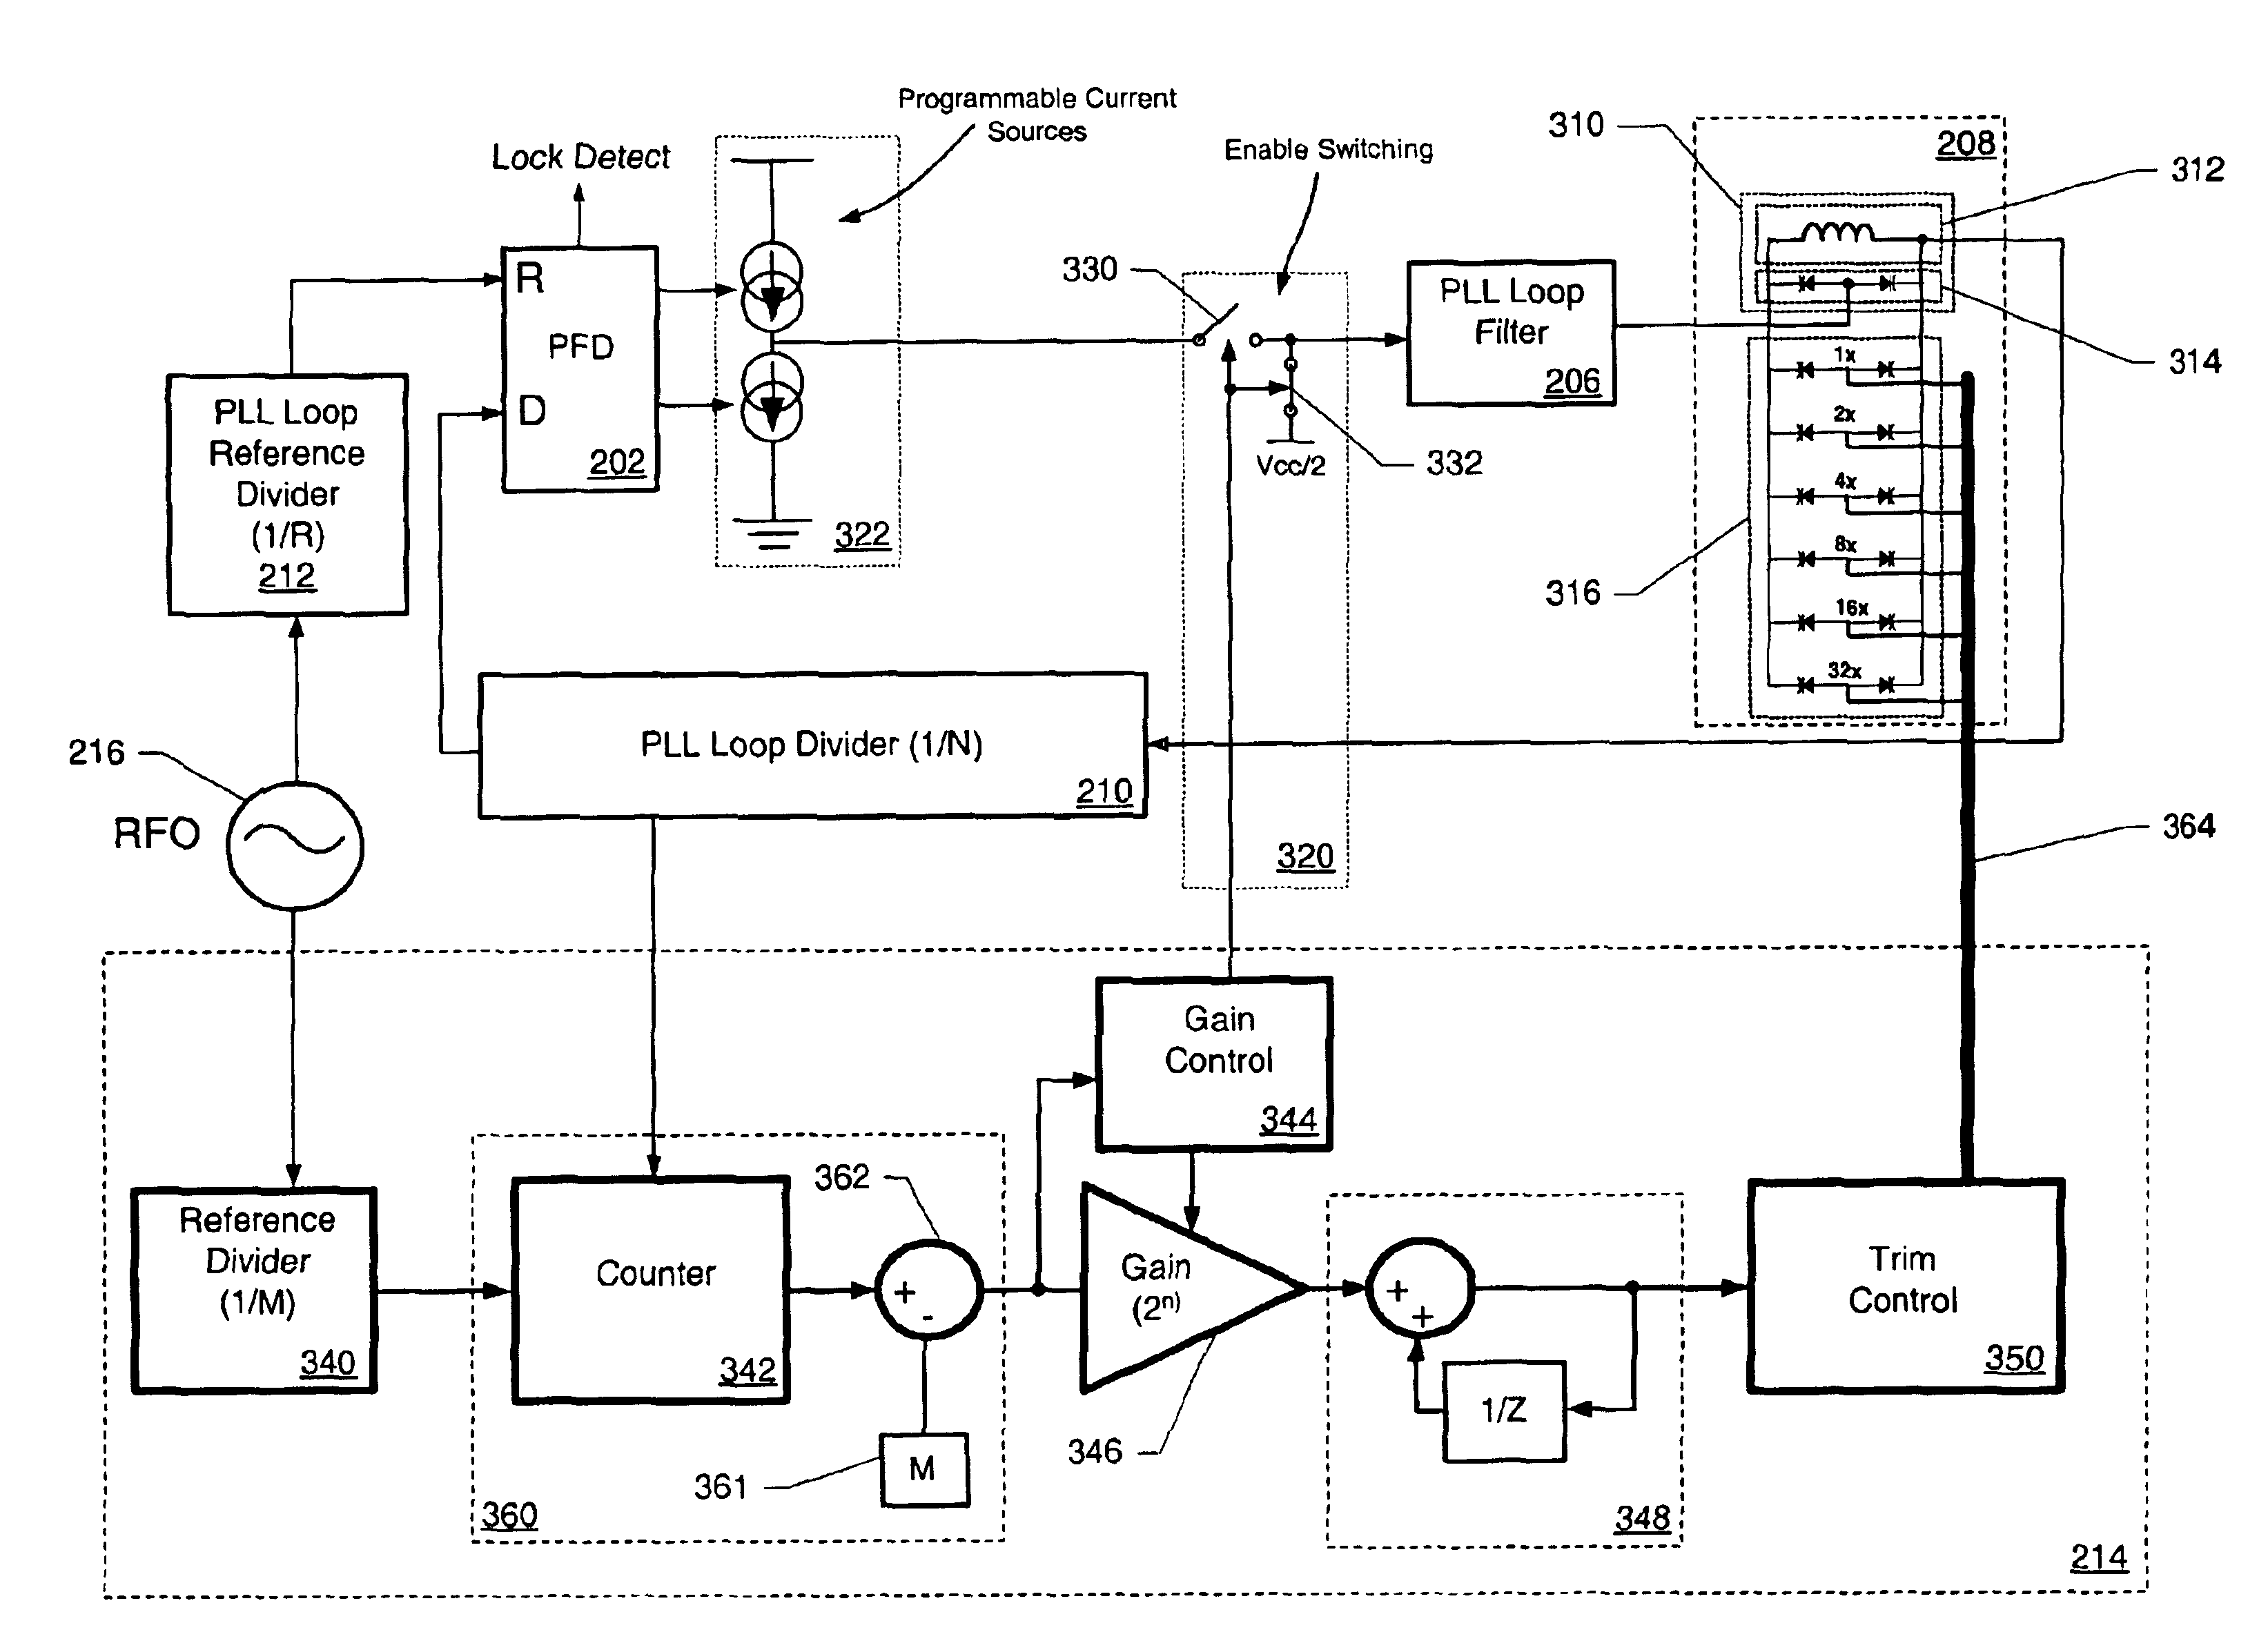 All digital PLL trimming circuit